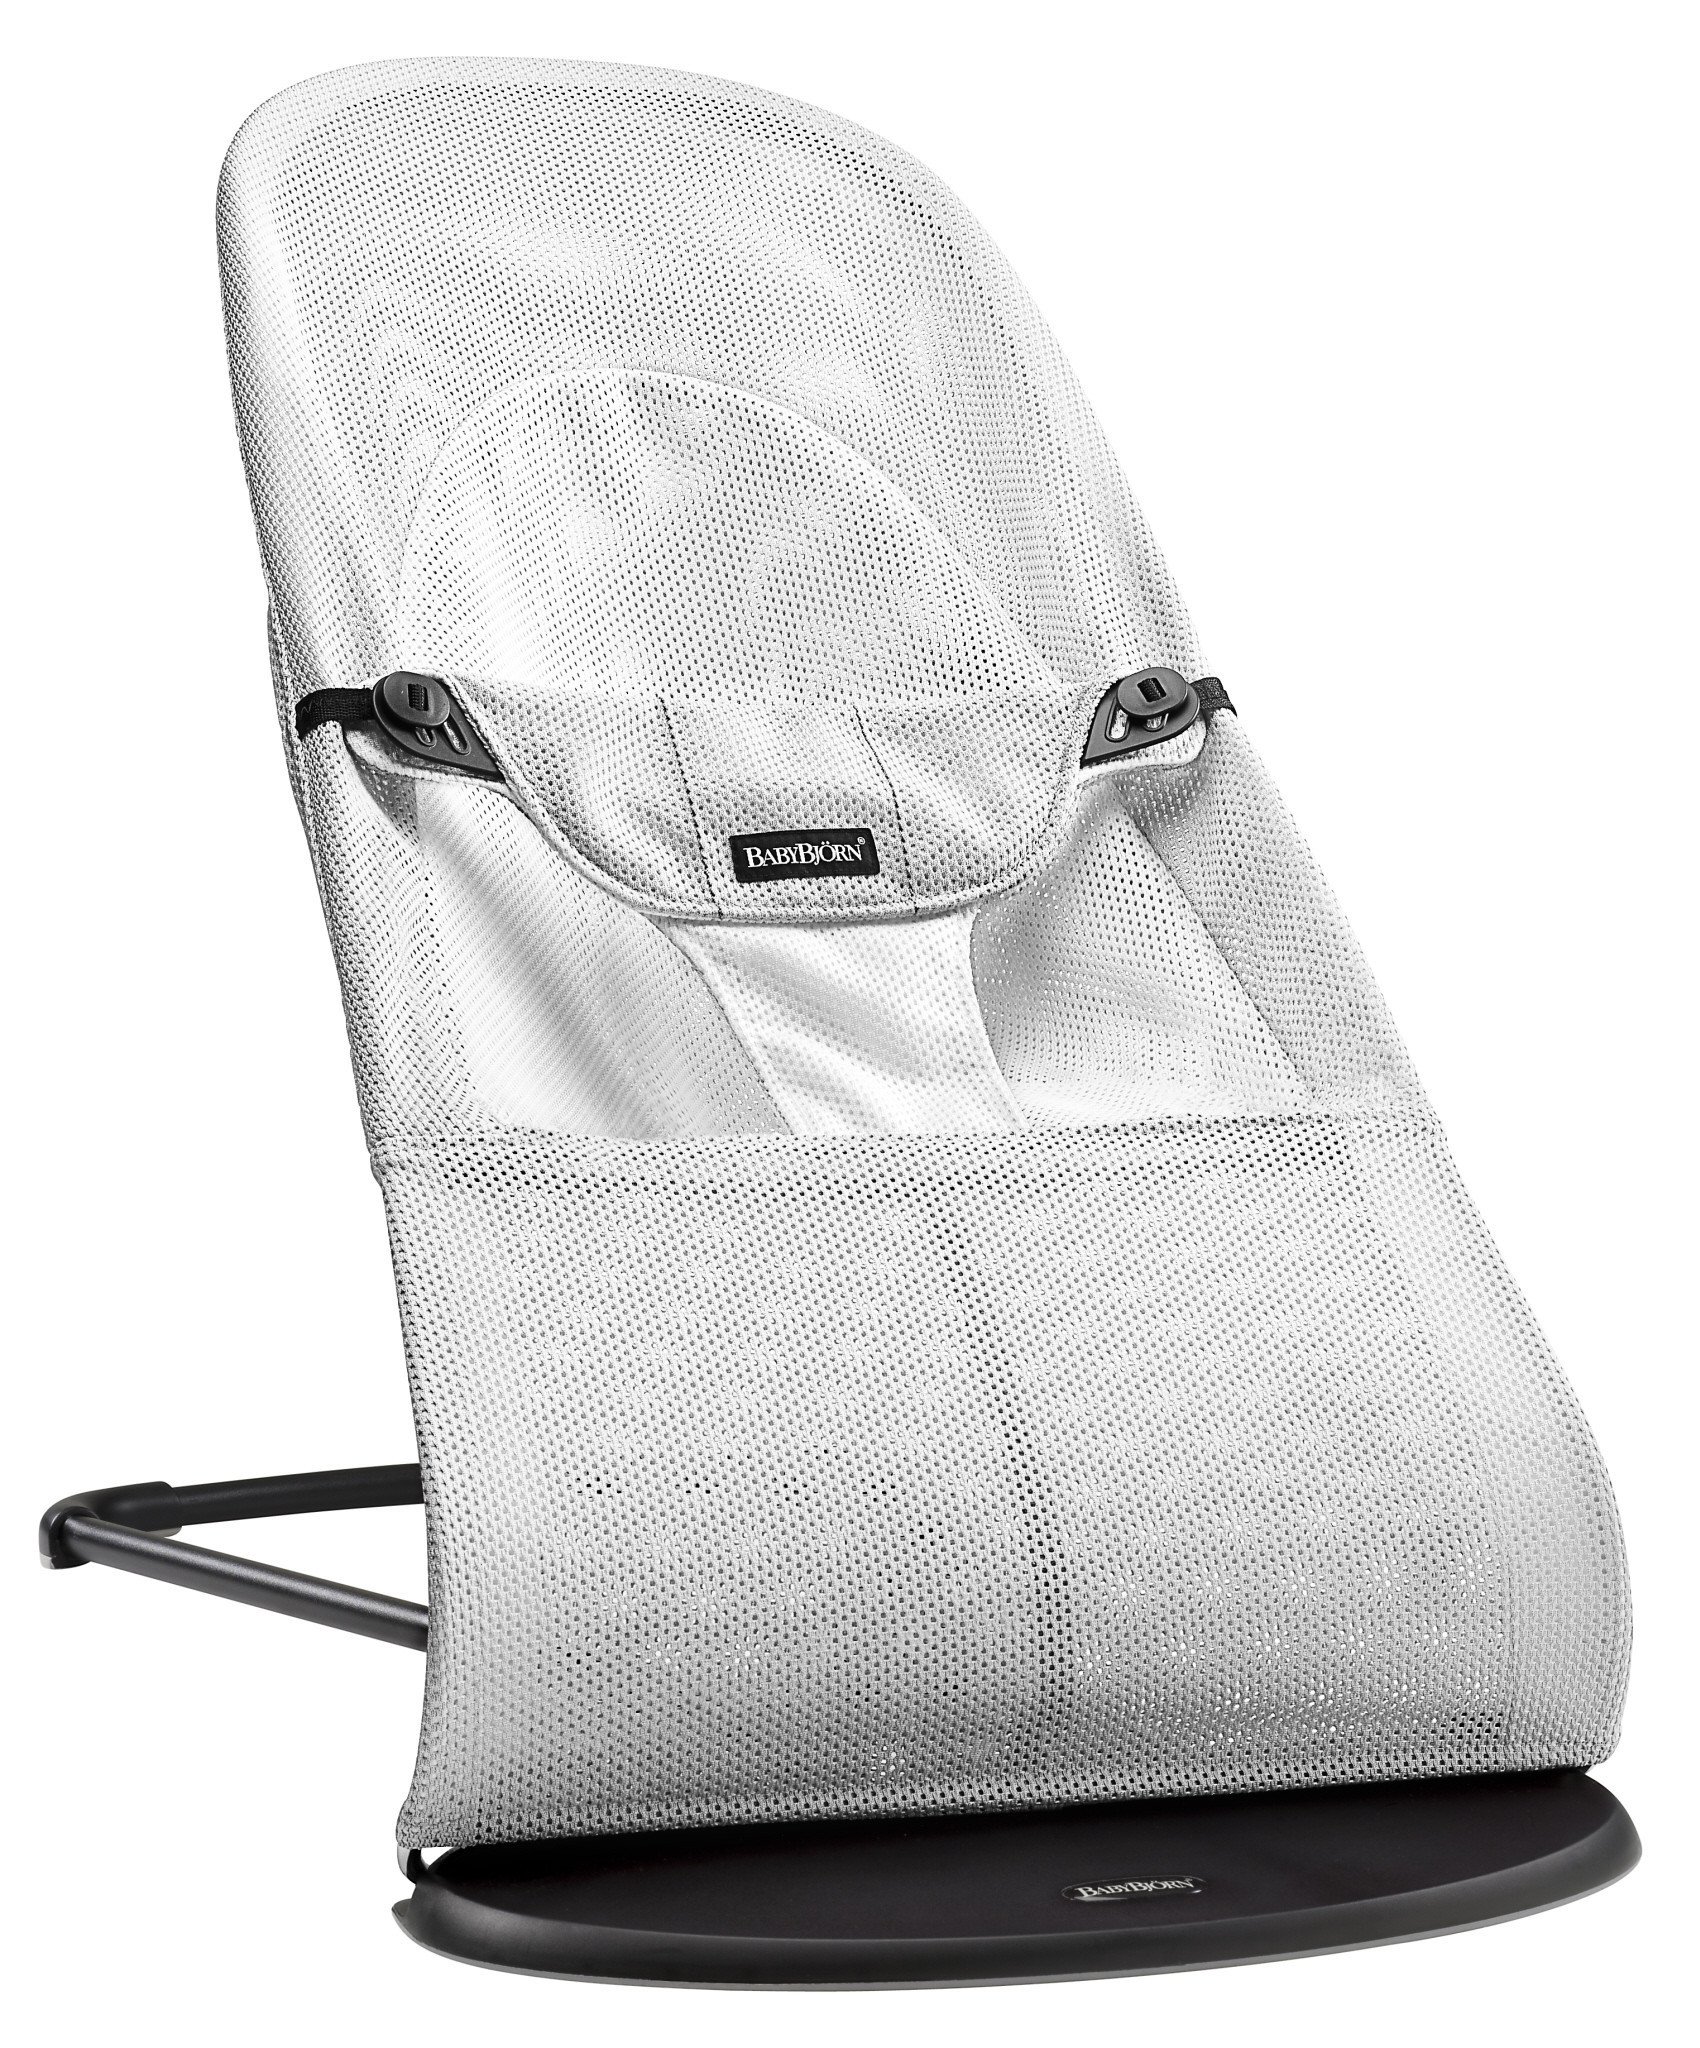 Šūpuļkrēsliņš BabyBjorn Bouncer Balance Soft Mesh silver/white 005029